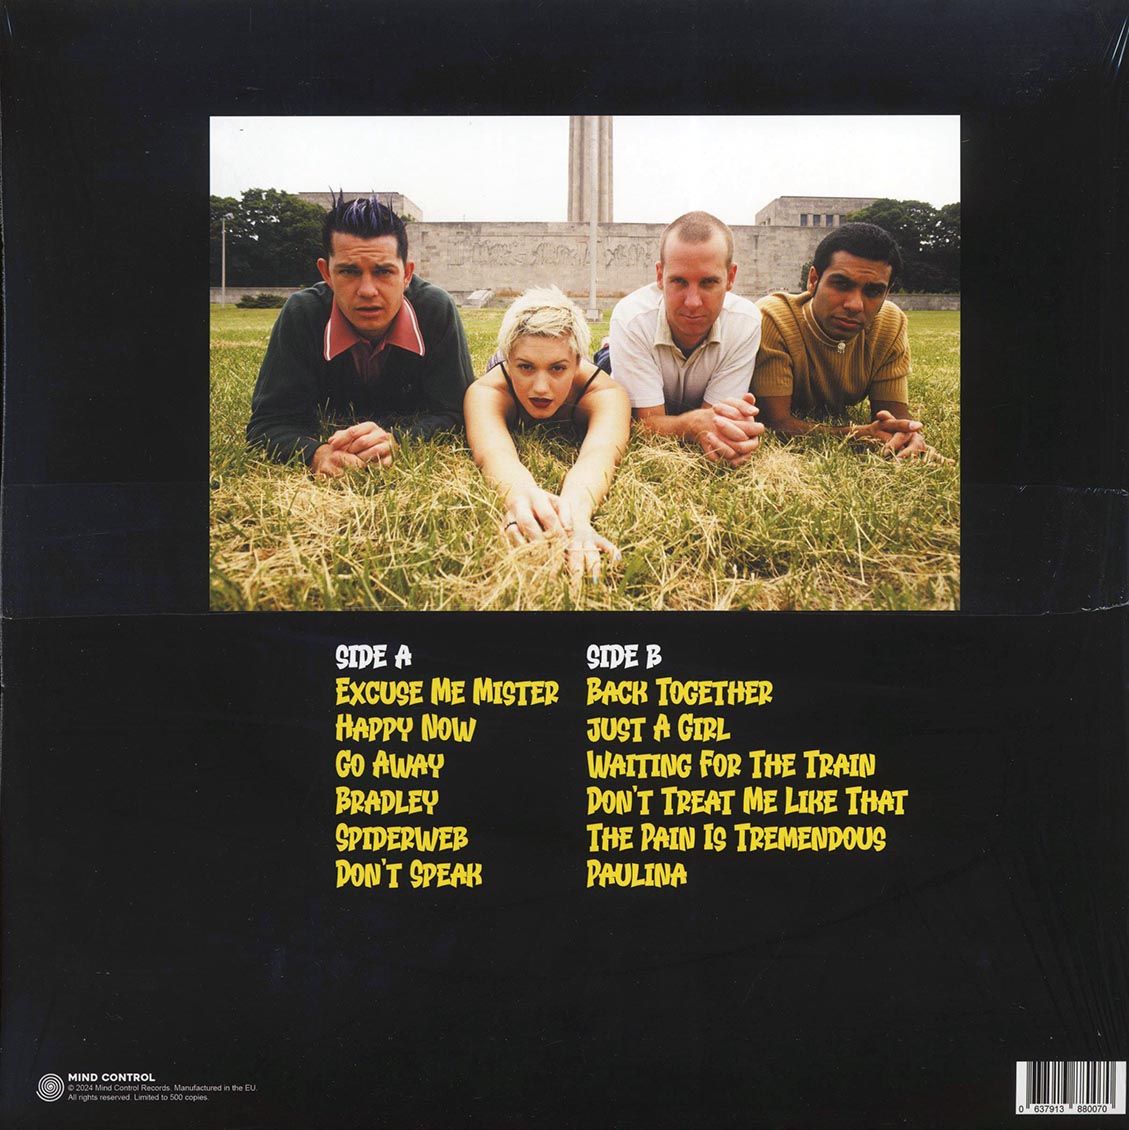 No Doubt - The Web You Spin: Live At KROZ Weenie Roast, Irvine, California, June 15th 1996 - Vinyl LP, LP